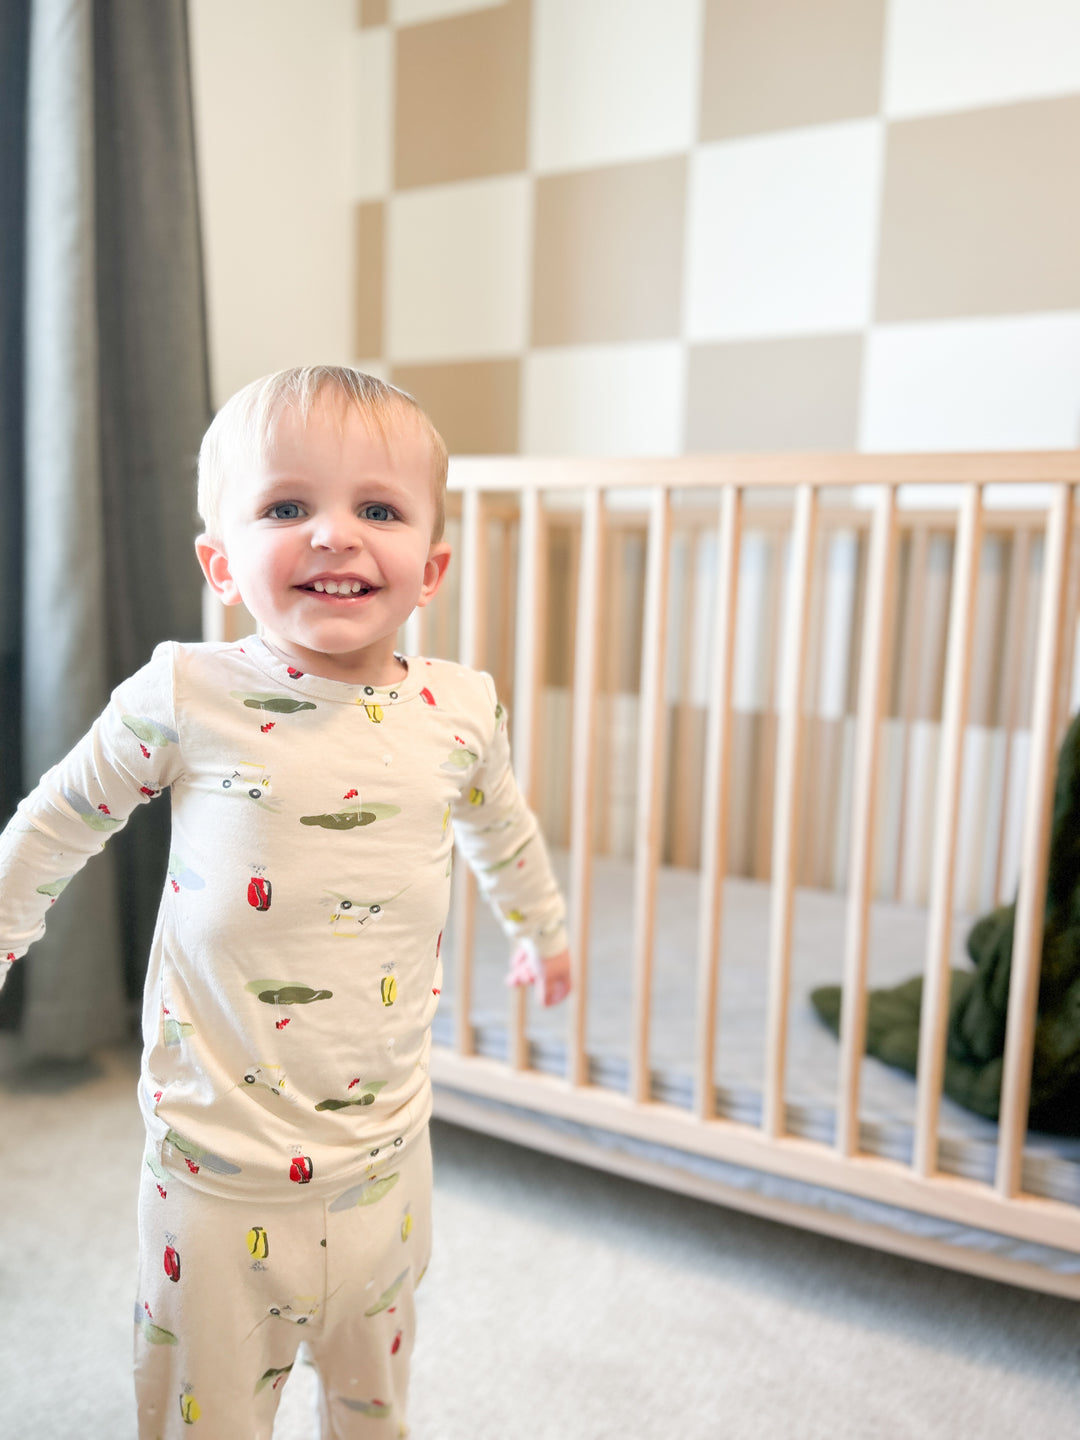 Milkberry Soft Bamboo Pajamas Toddler Pajama Set Boys in Golf Cart Pattern  – Cutie Pie Baby Direct